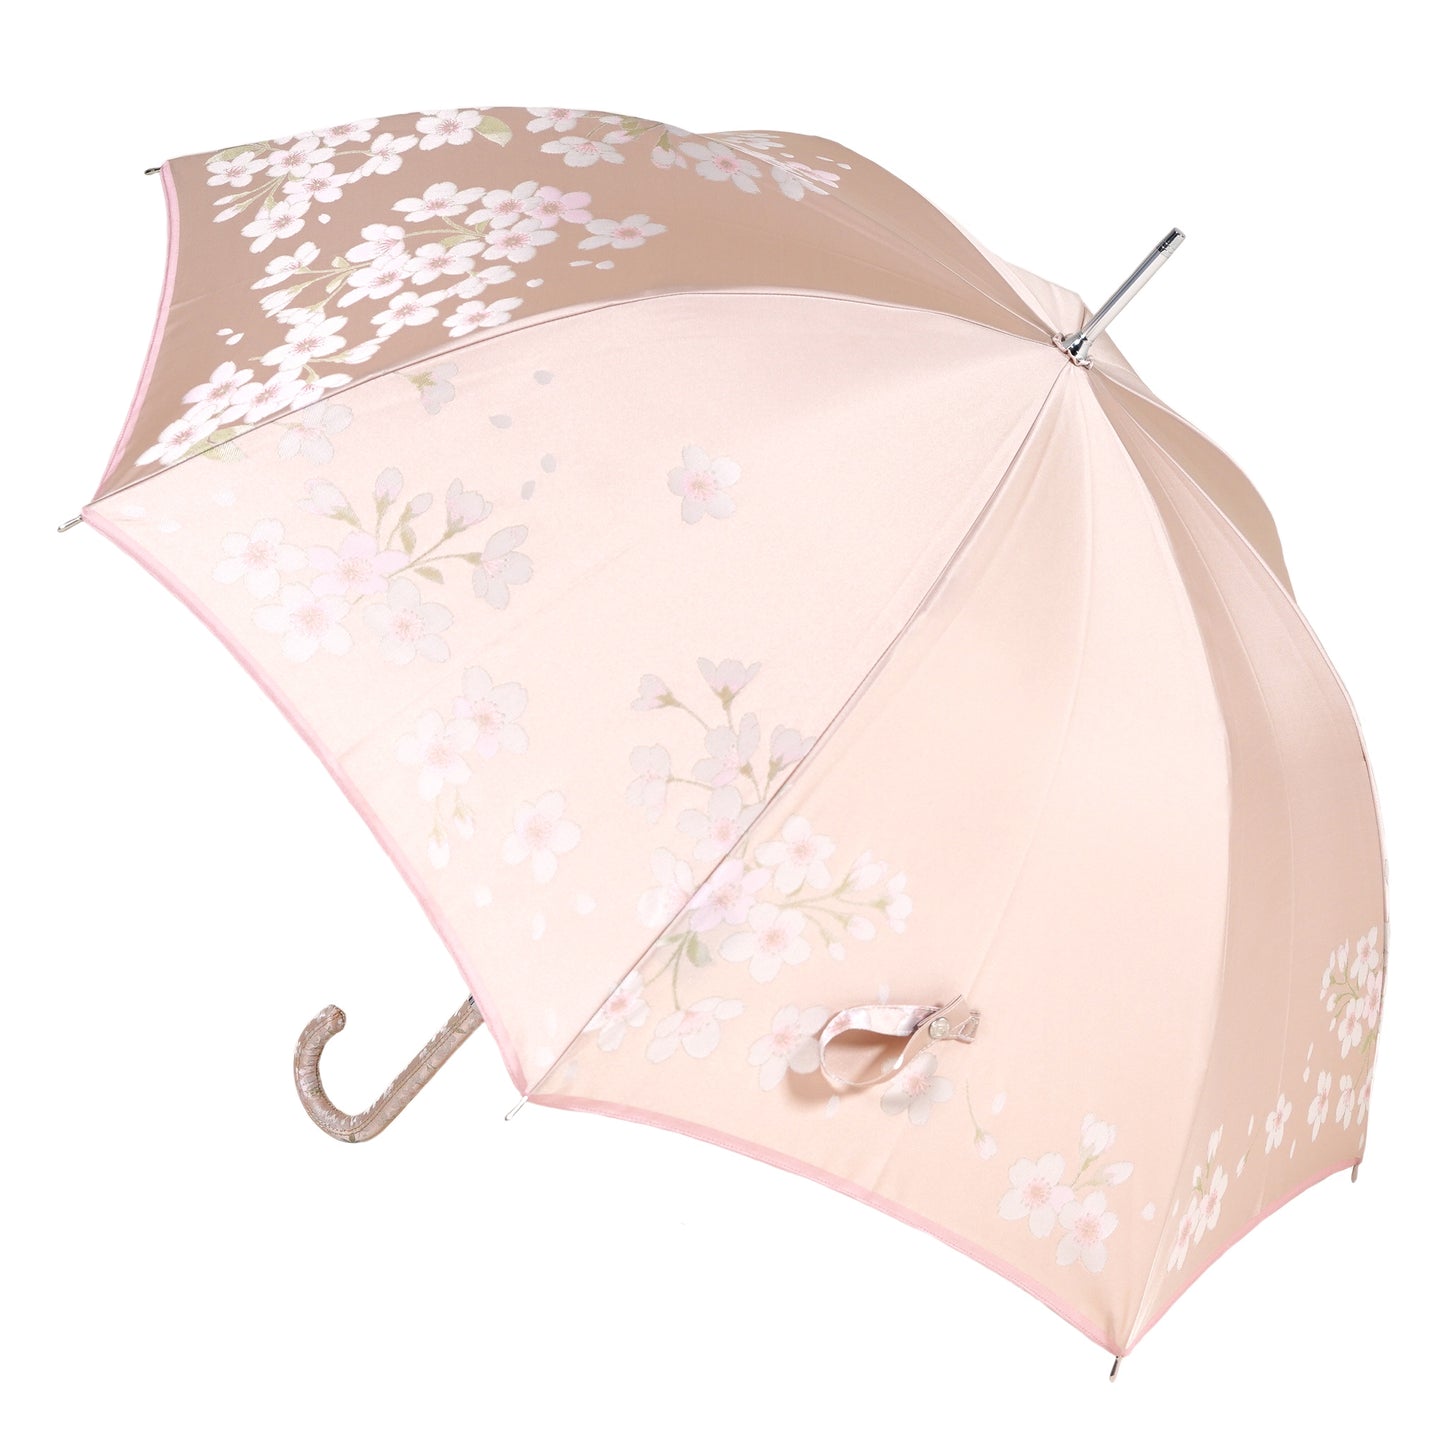 Rain & Sun Umbrella  "Cherry Blossoms" - By Emotion International